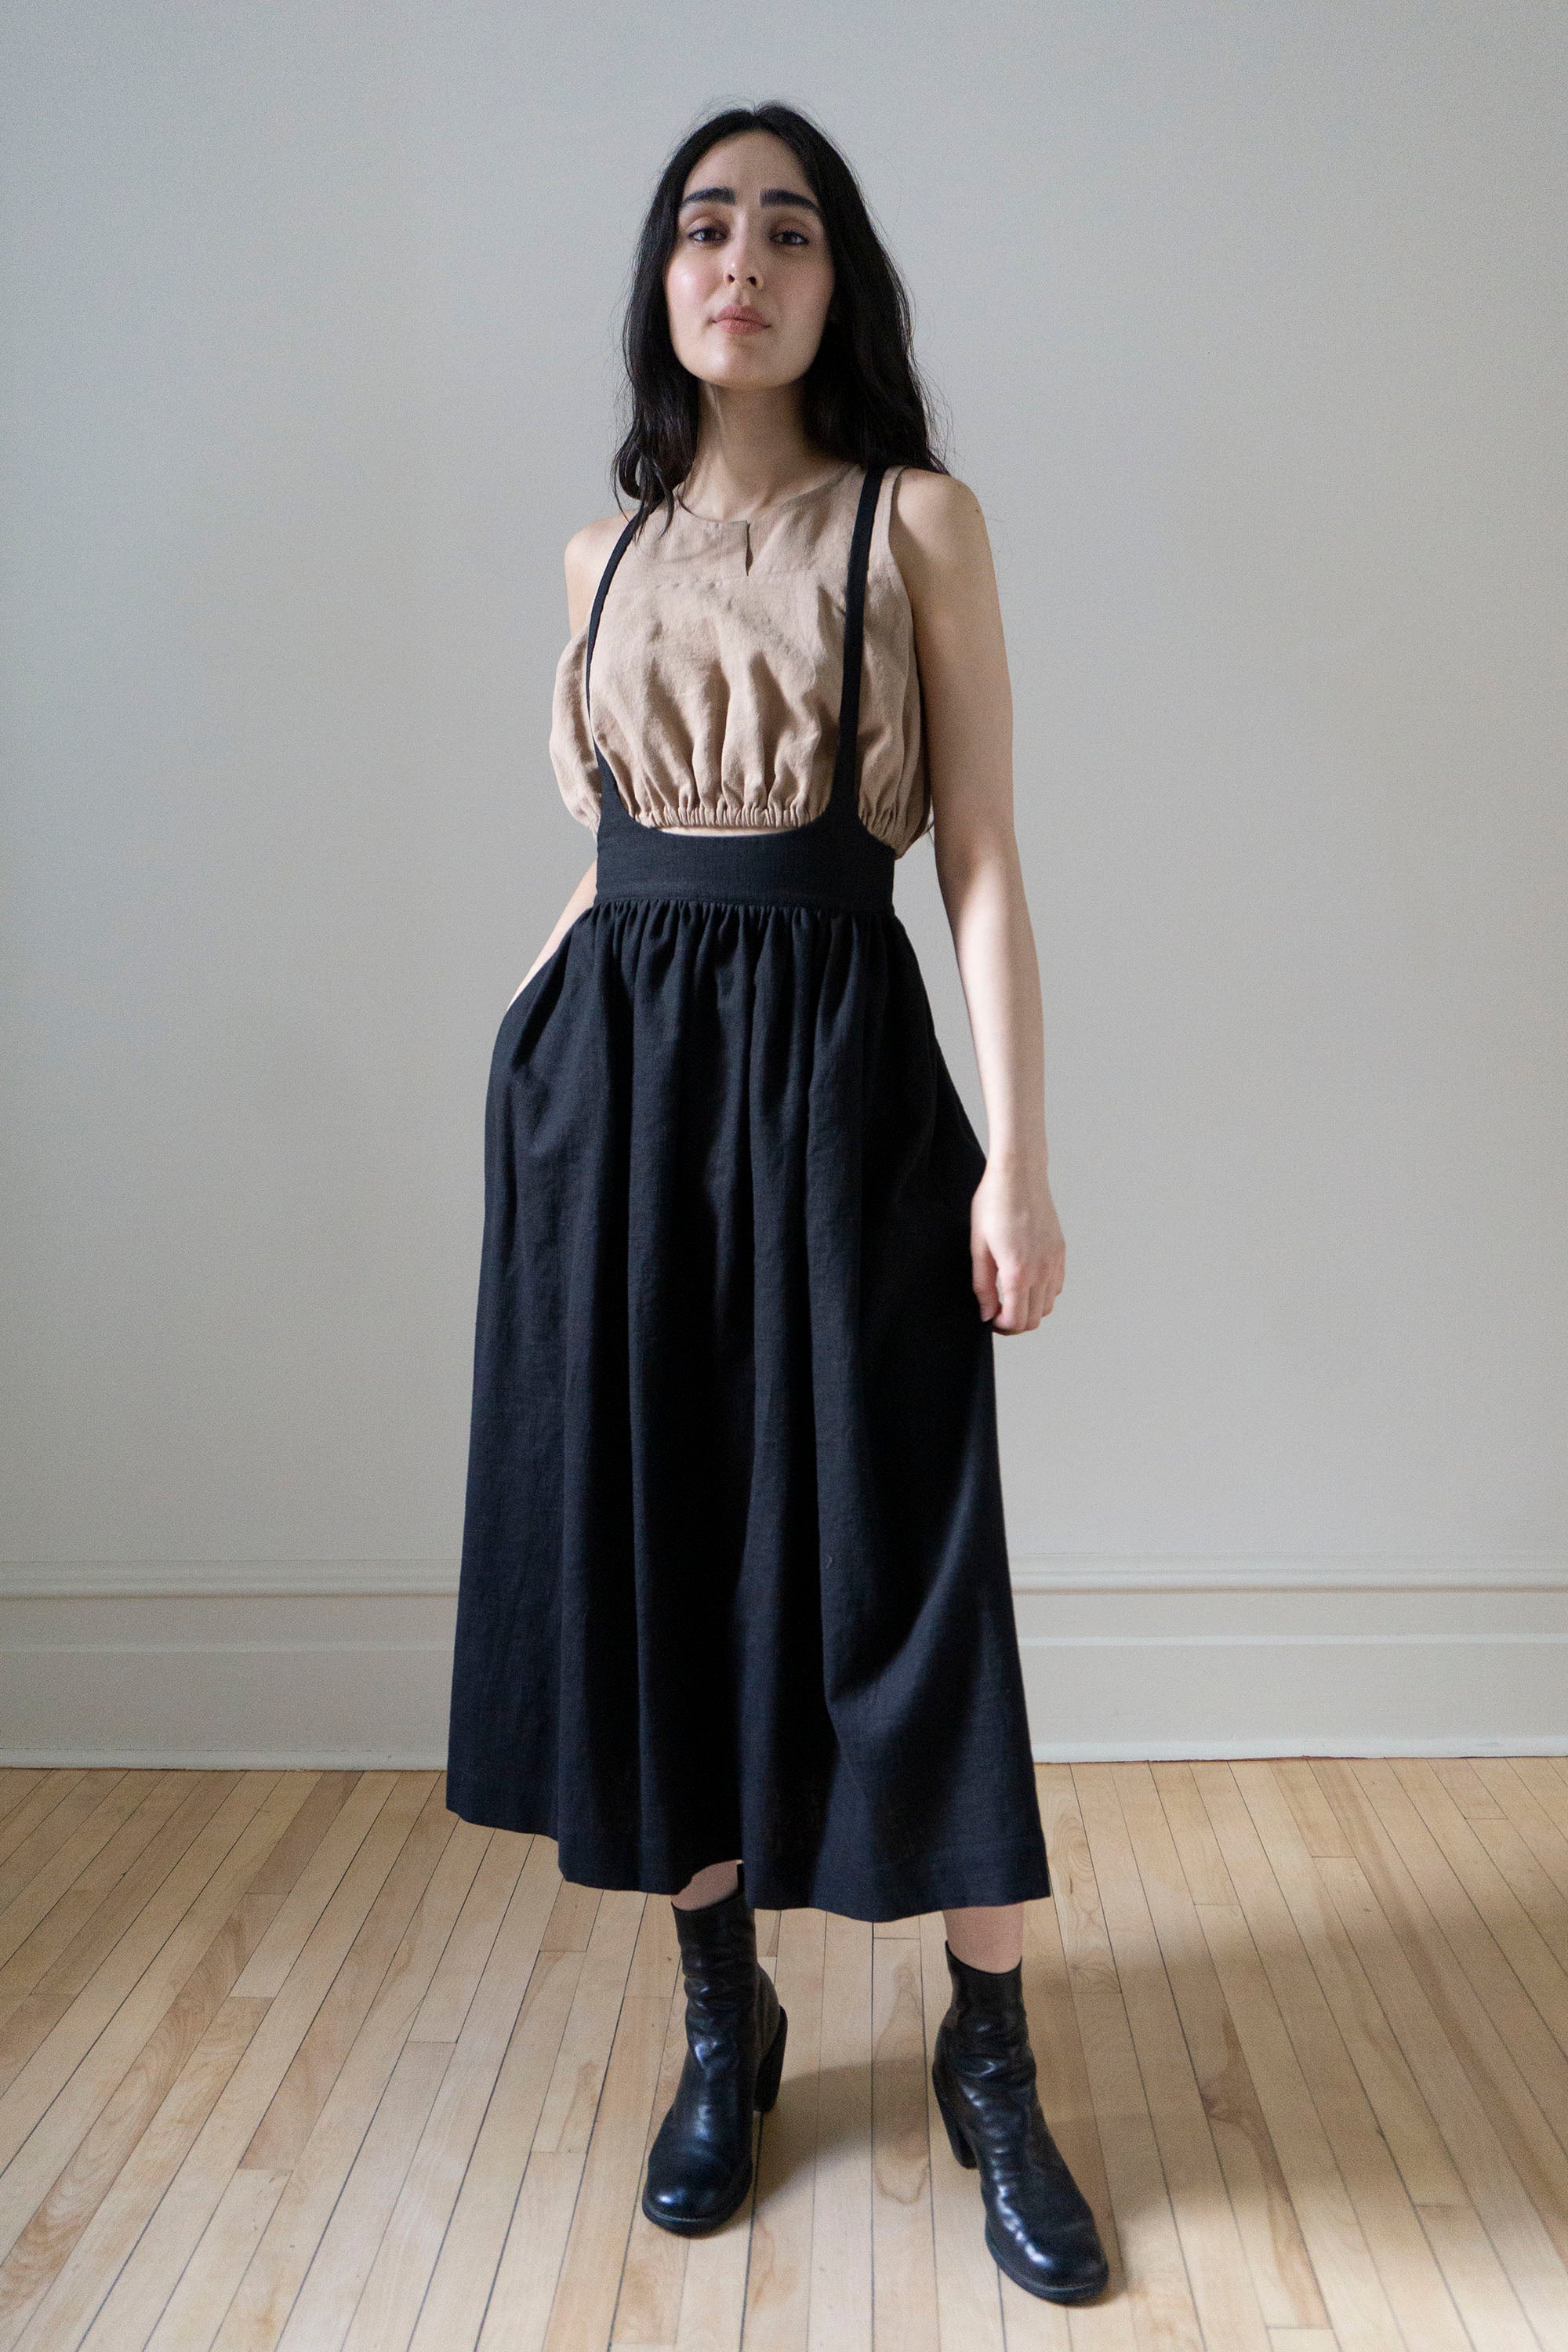 Ursula Skirt - Black Linen